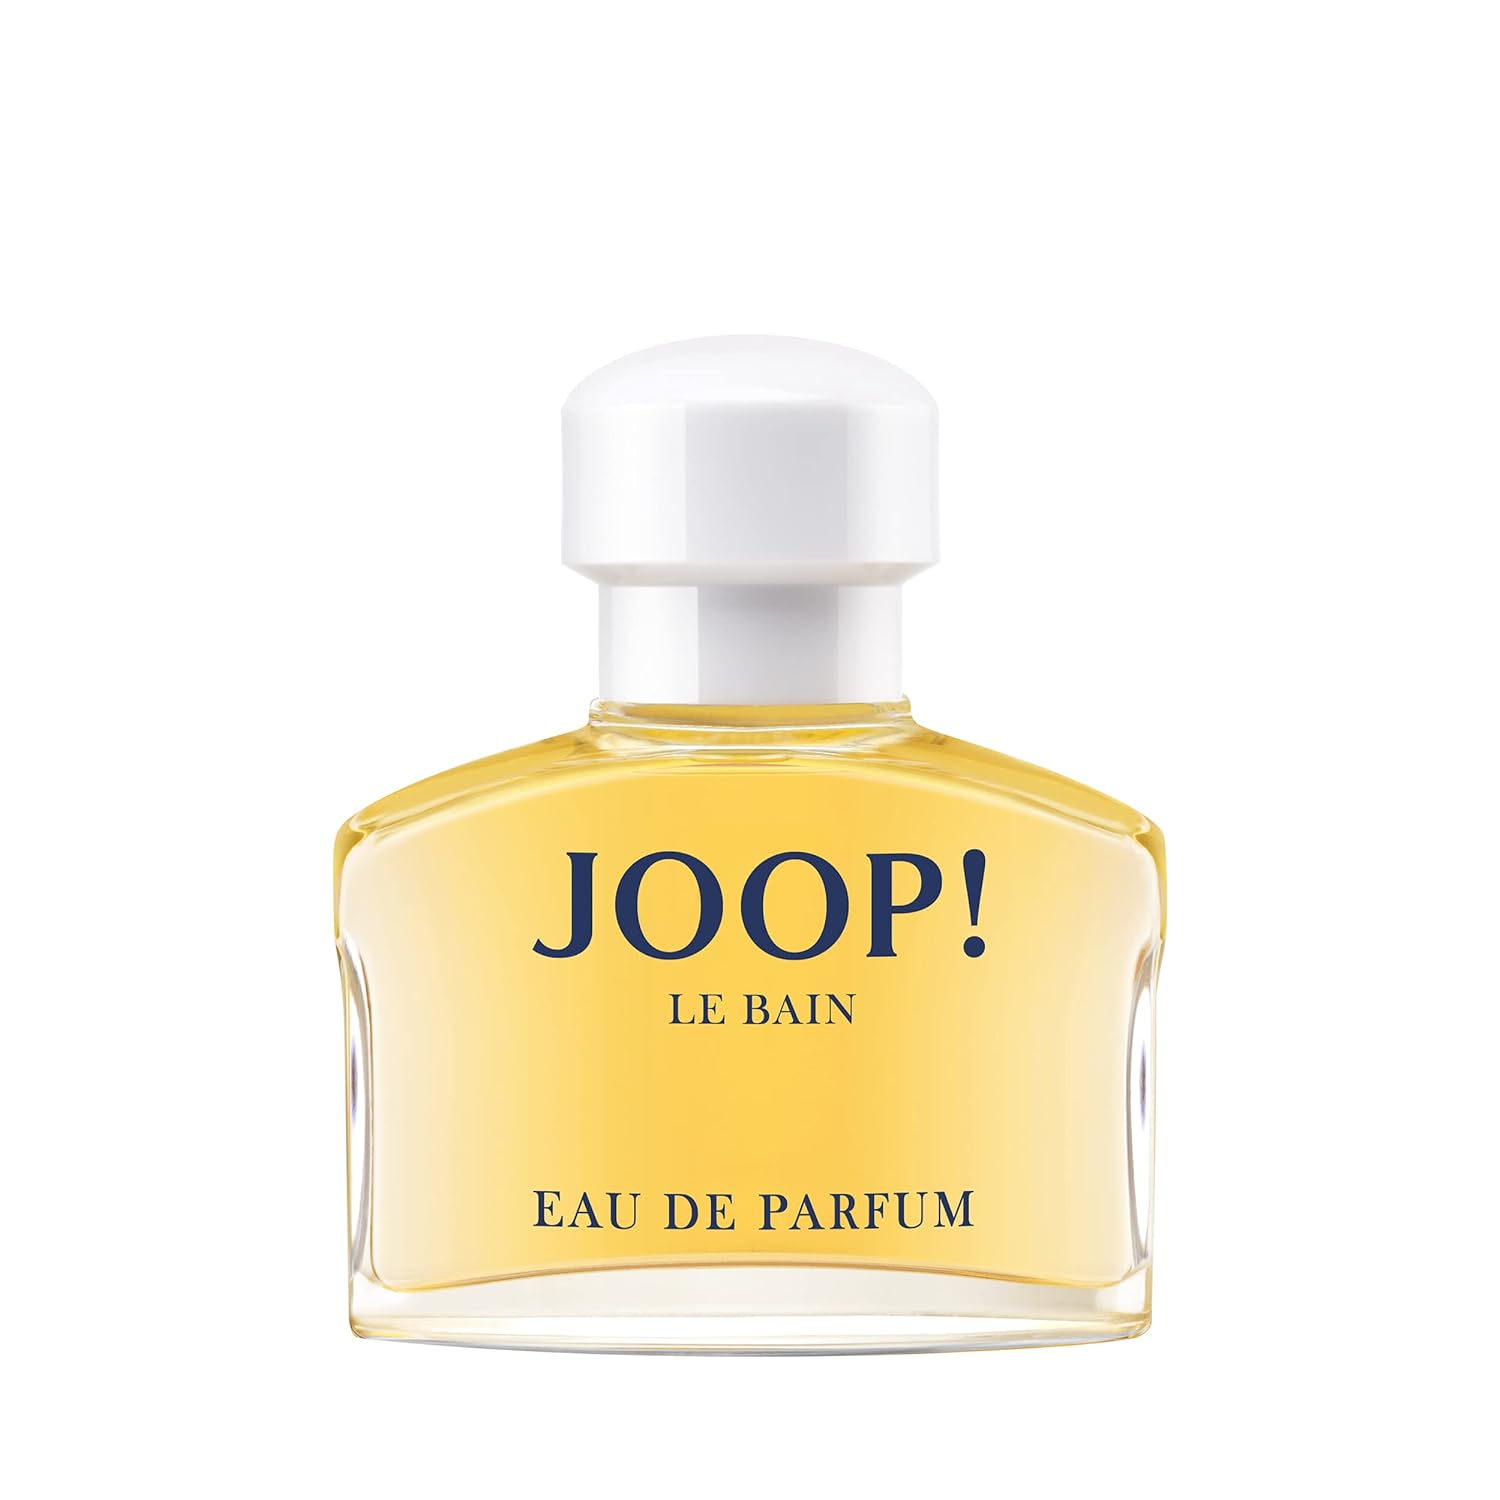 YOOP! Le Bain Eau de Parfum for Her - Floral Fruity Fragrance for Modern Woman